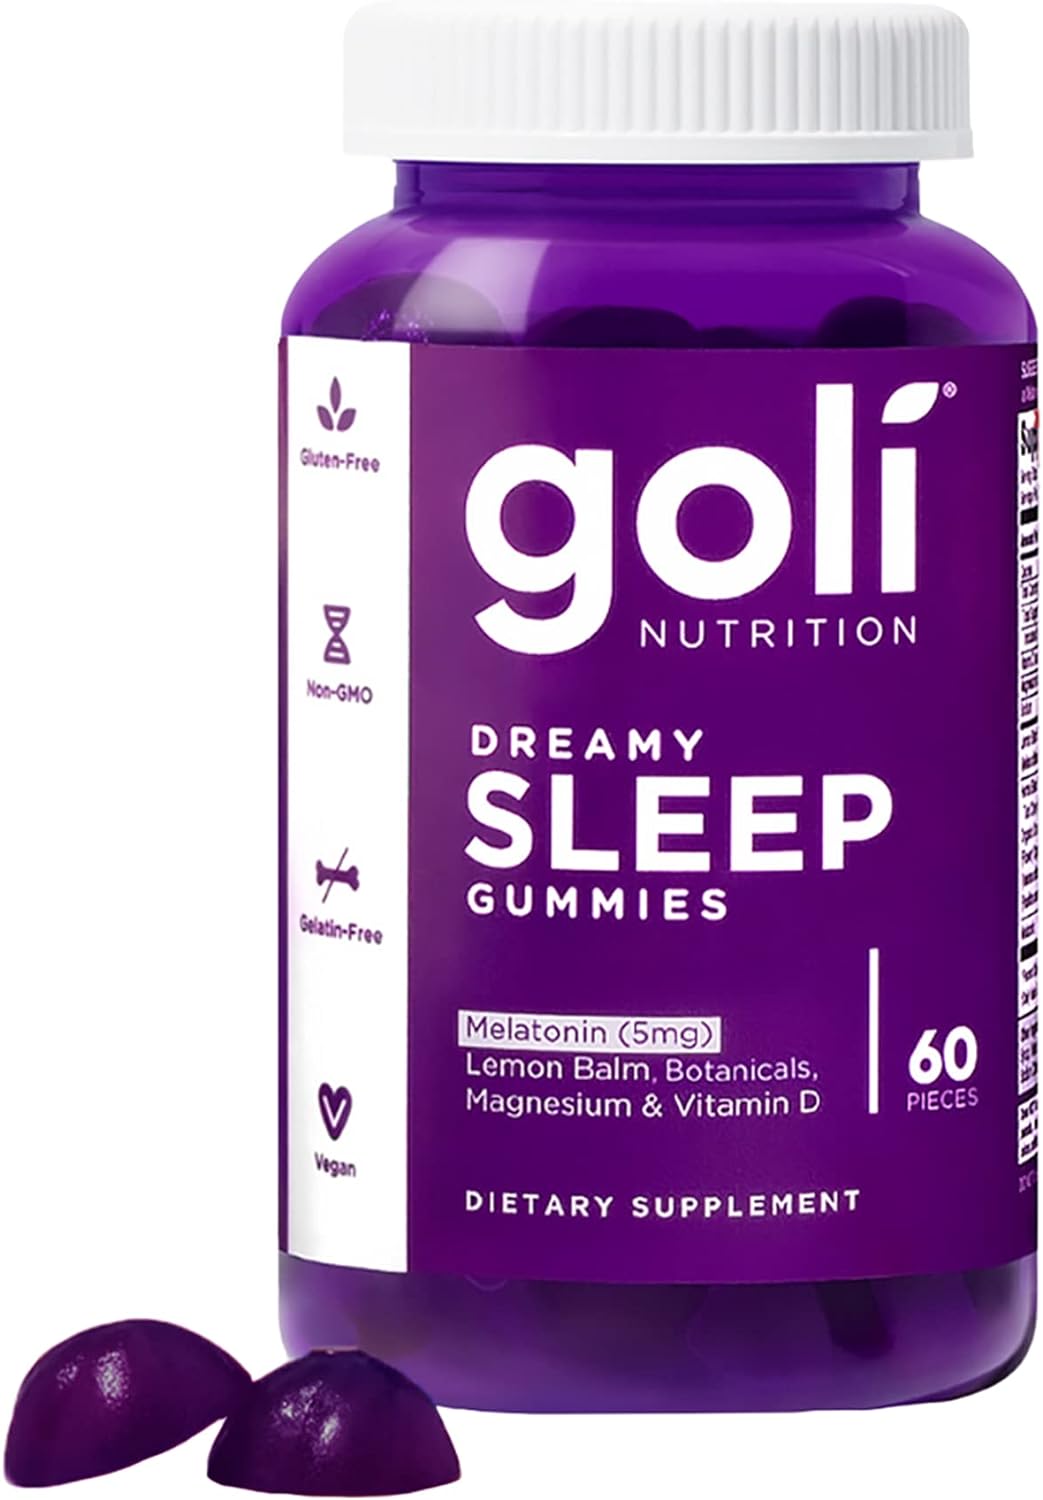 GOLI® NUTRITION Dreamy Sleep Gummies